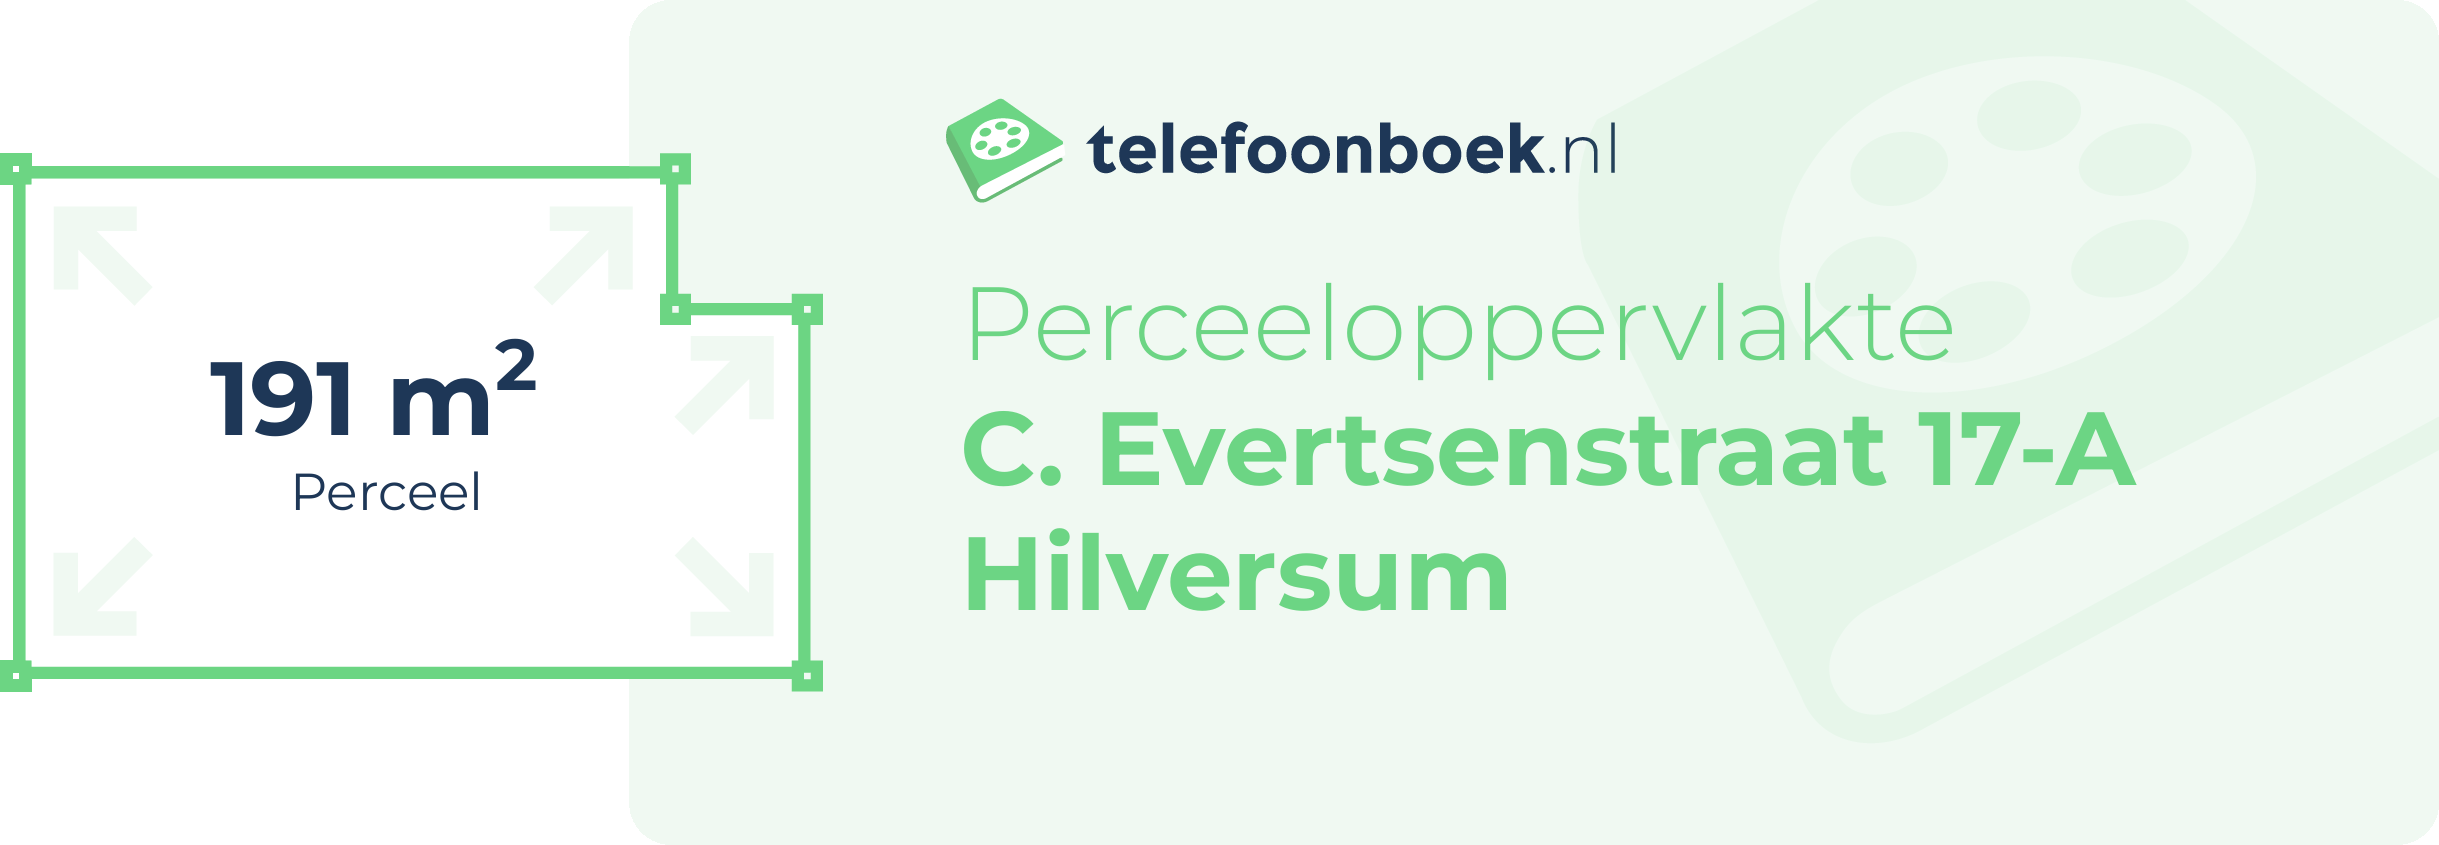 Perceeloppervlakte C. Evertsenstraat 17-A Hilversum